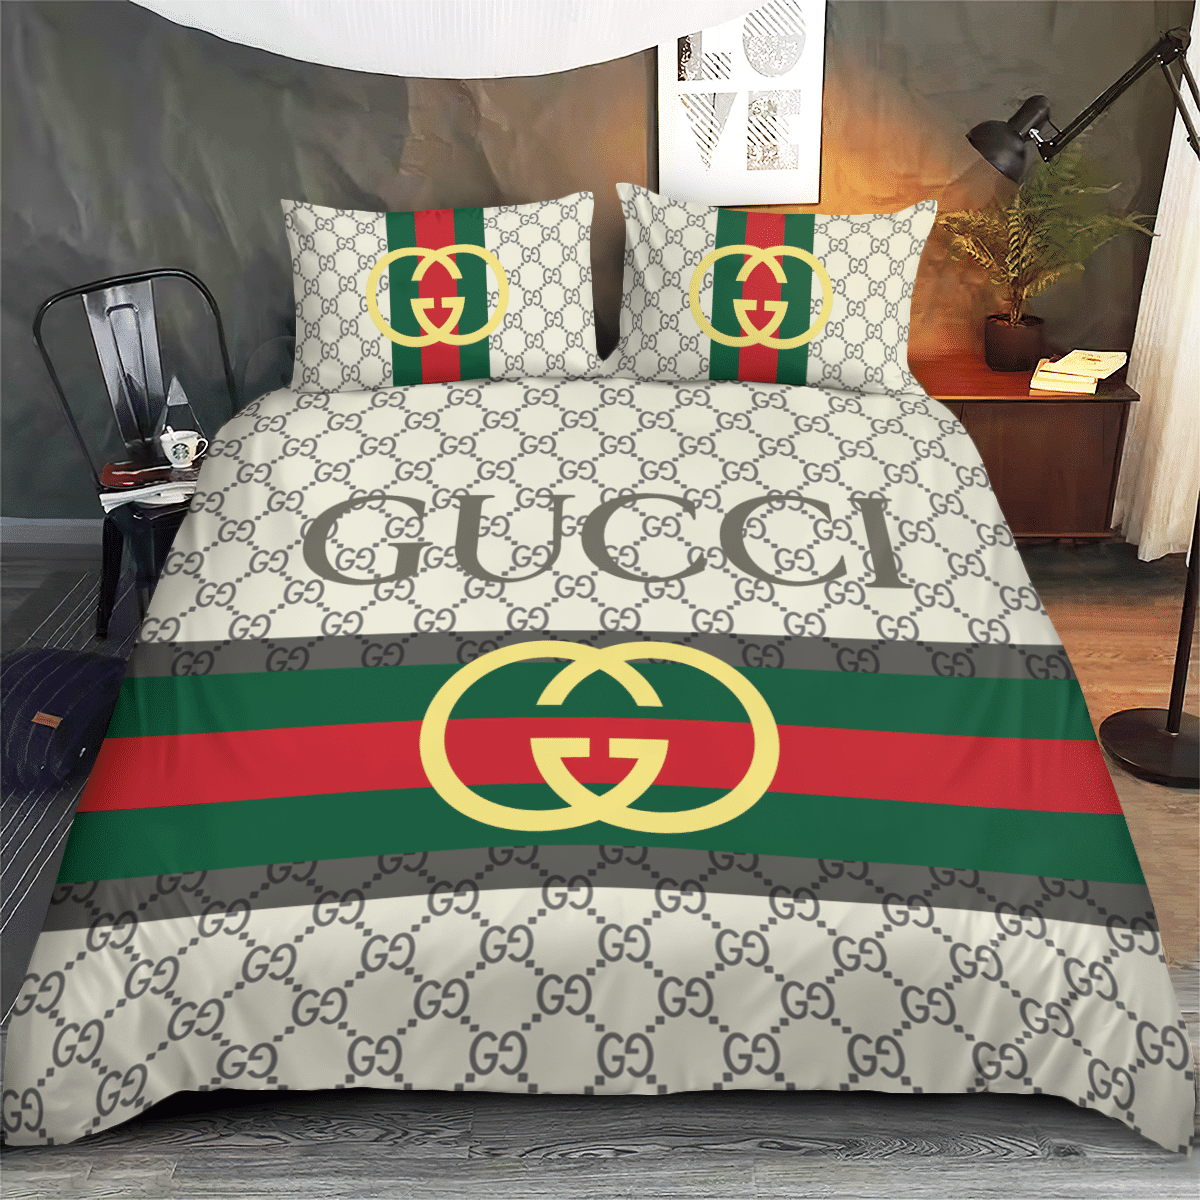 Gucci Bedding Sets 01